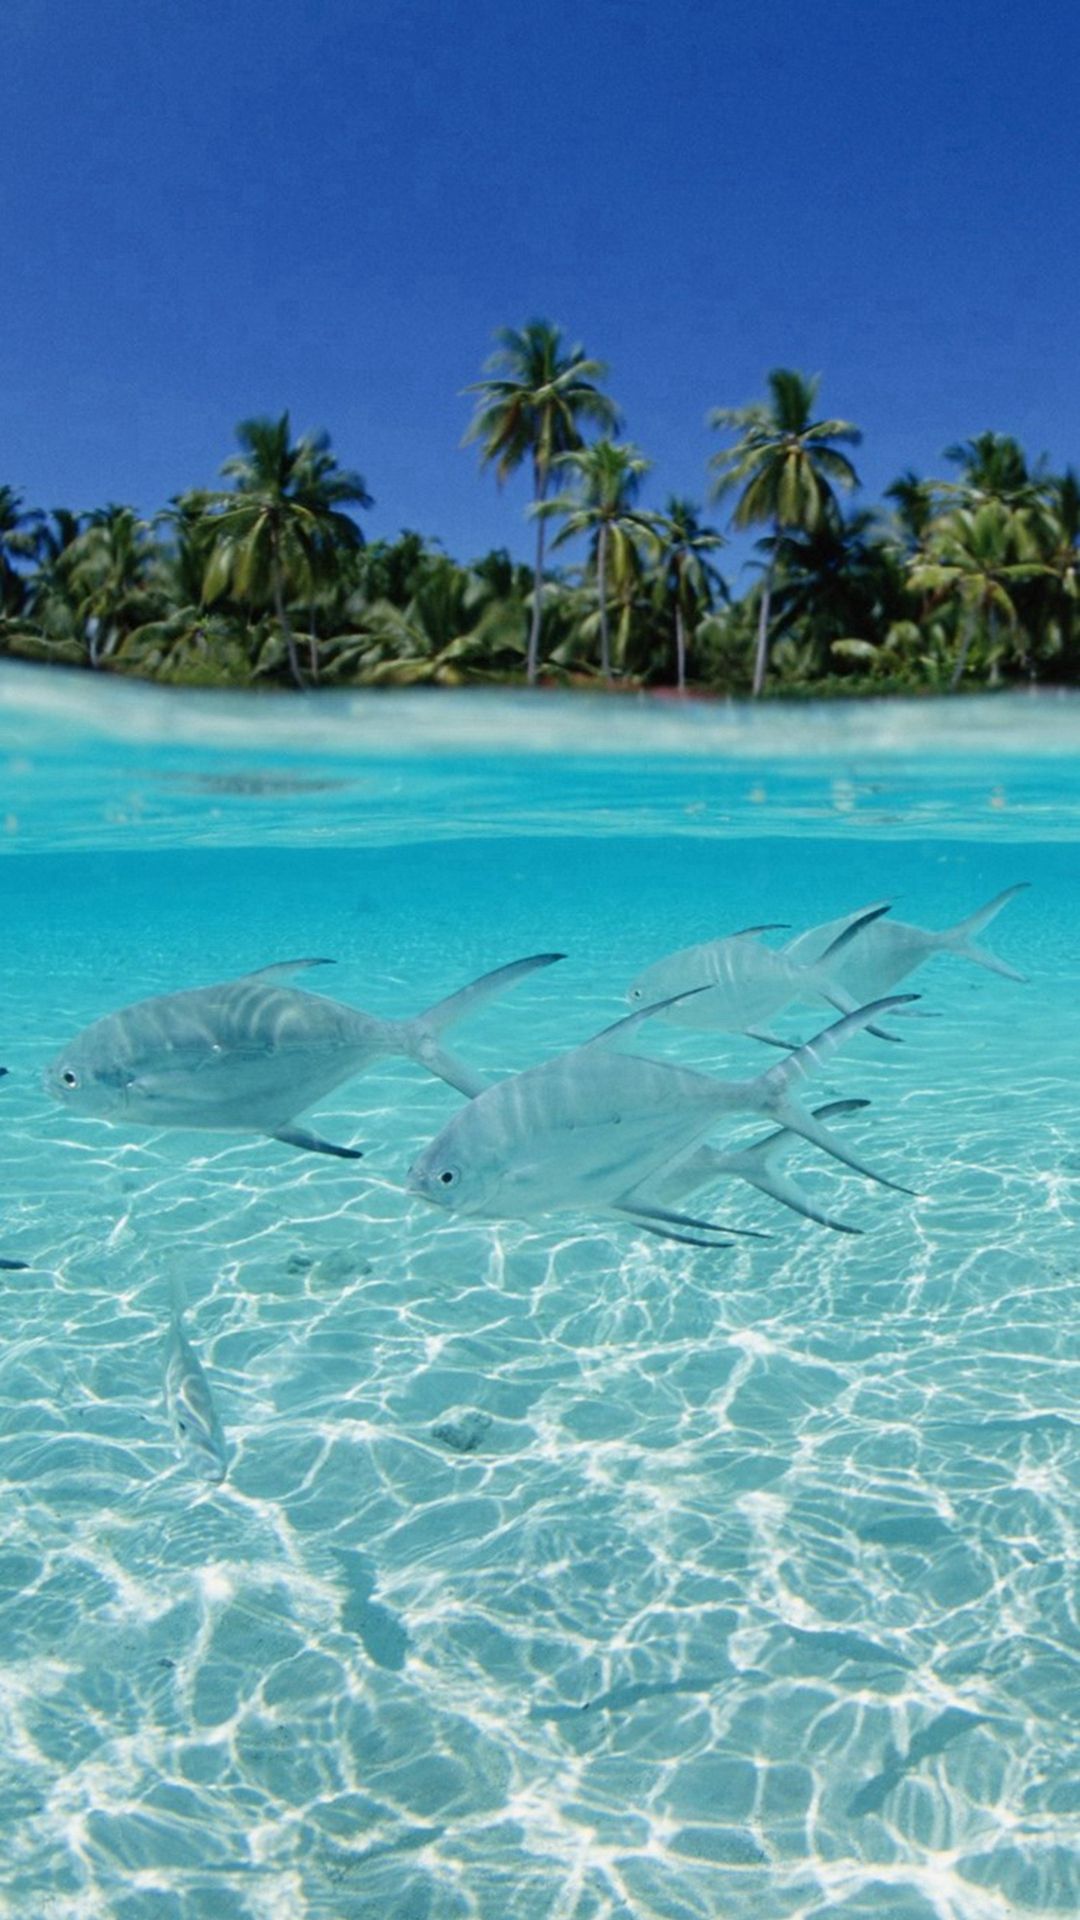 Tropical Pure Sea Fish Scenery iPhone 8 Wallpaper Free Download